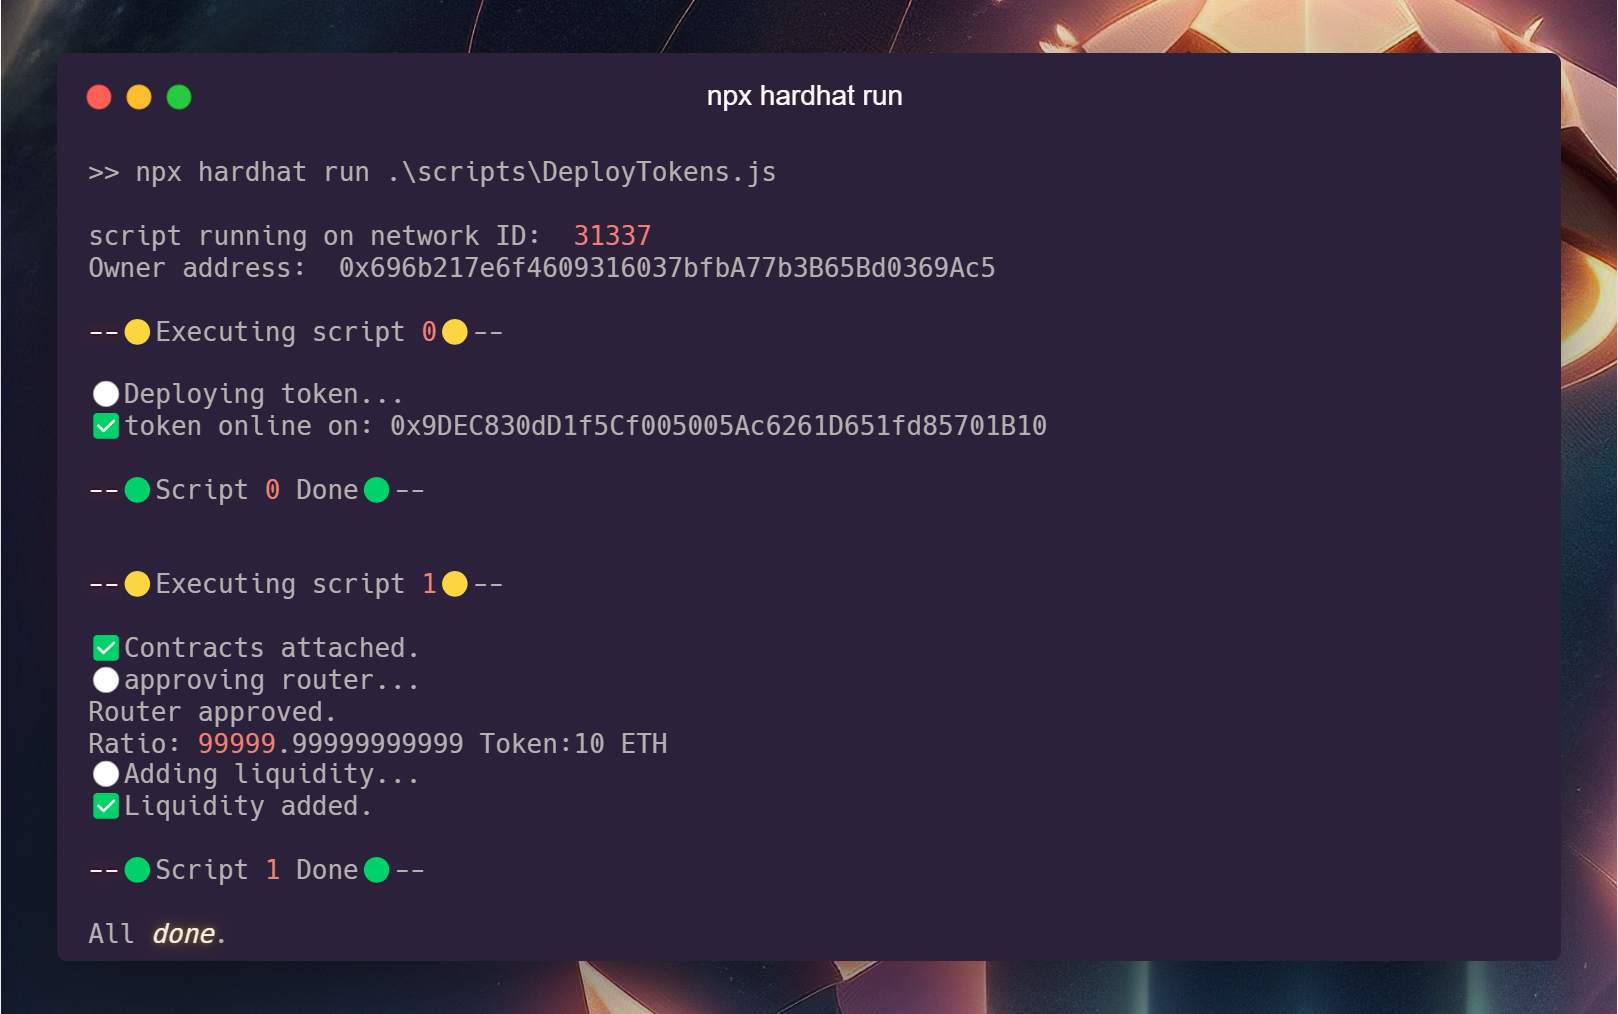 hardhat run script results